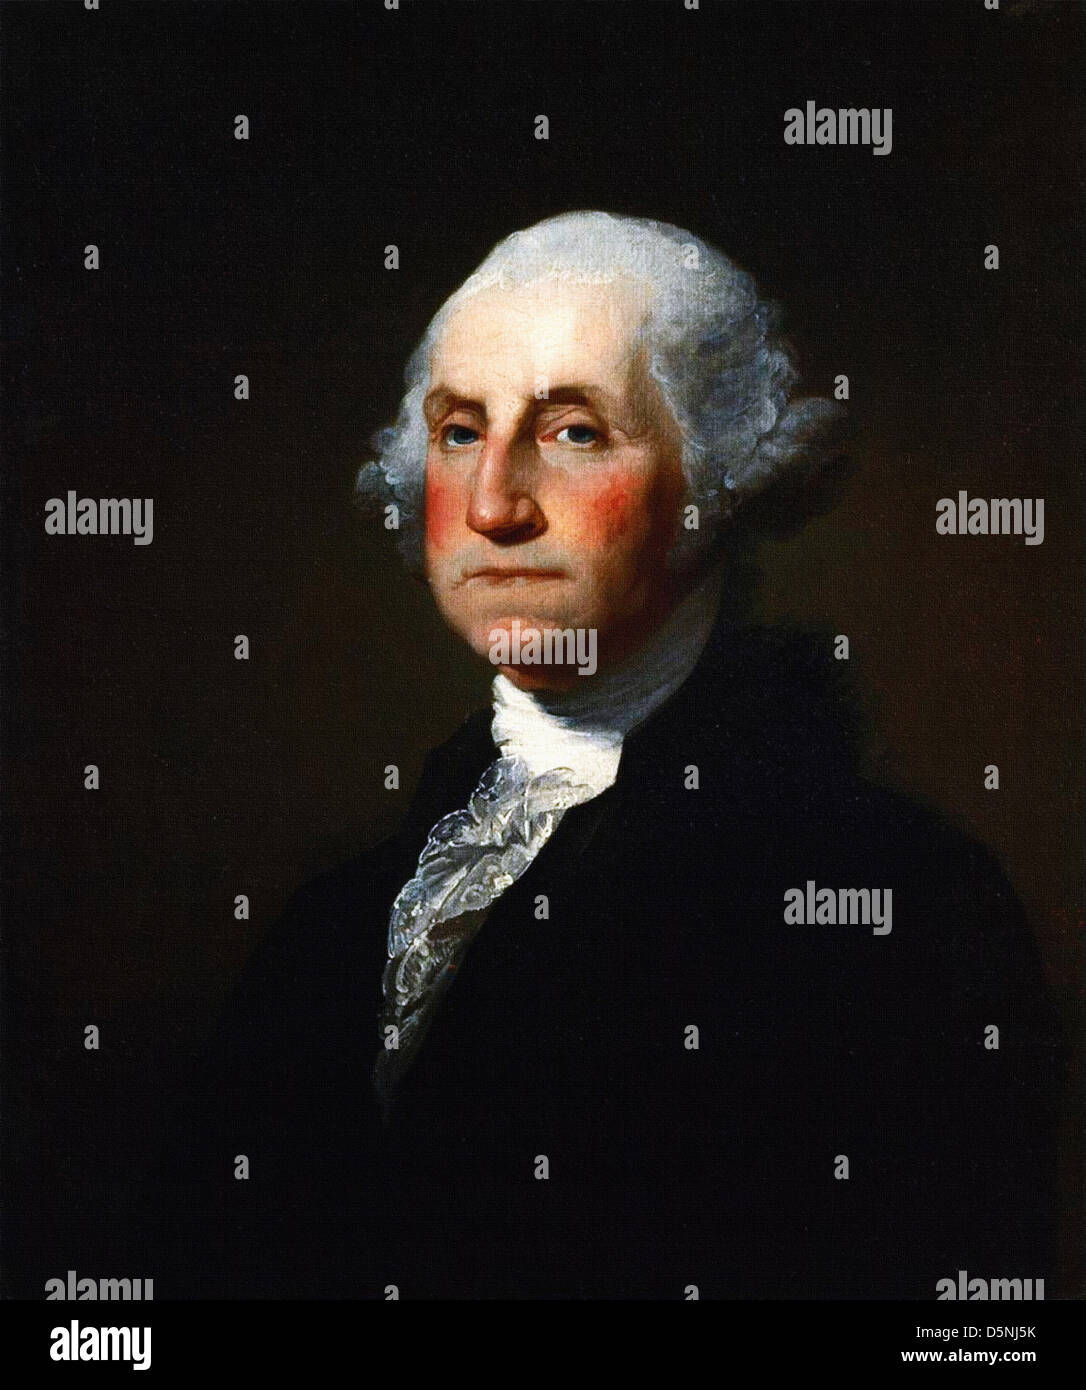 Gilbert Charles Stuart, guter Präsident George Washington der erste. 1797-Öl auf Leinwand. Stockfoto